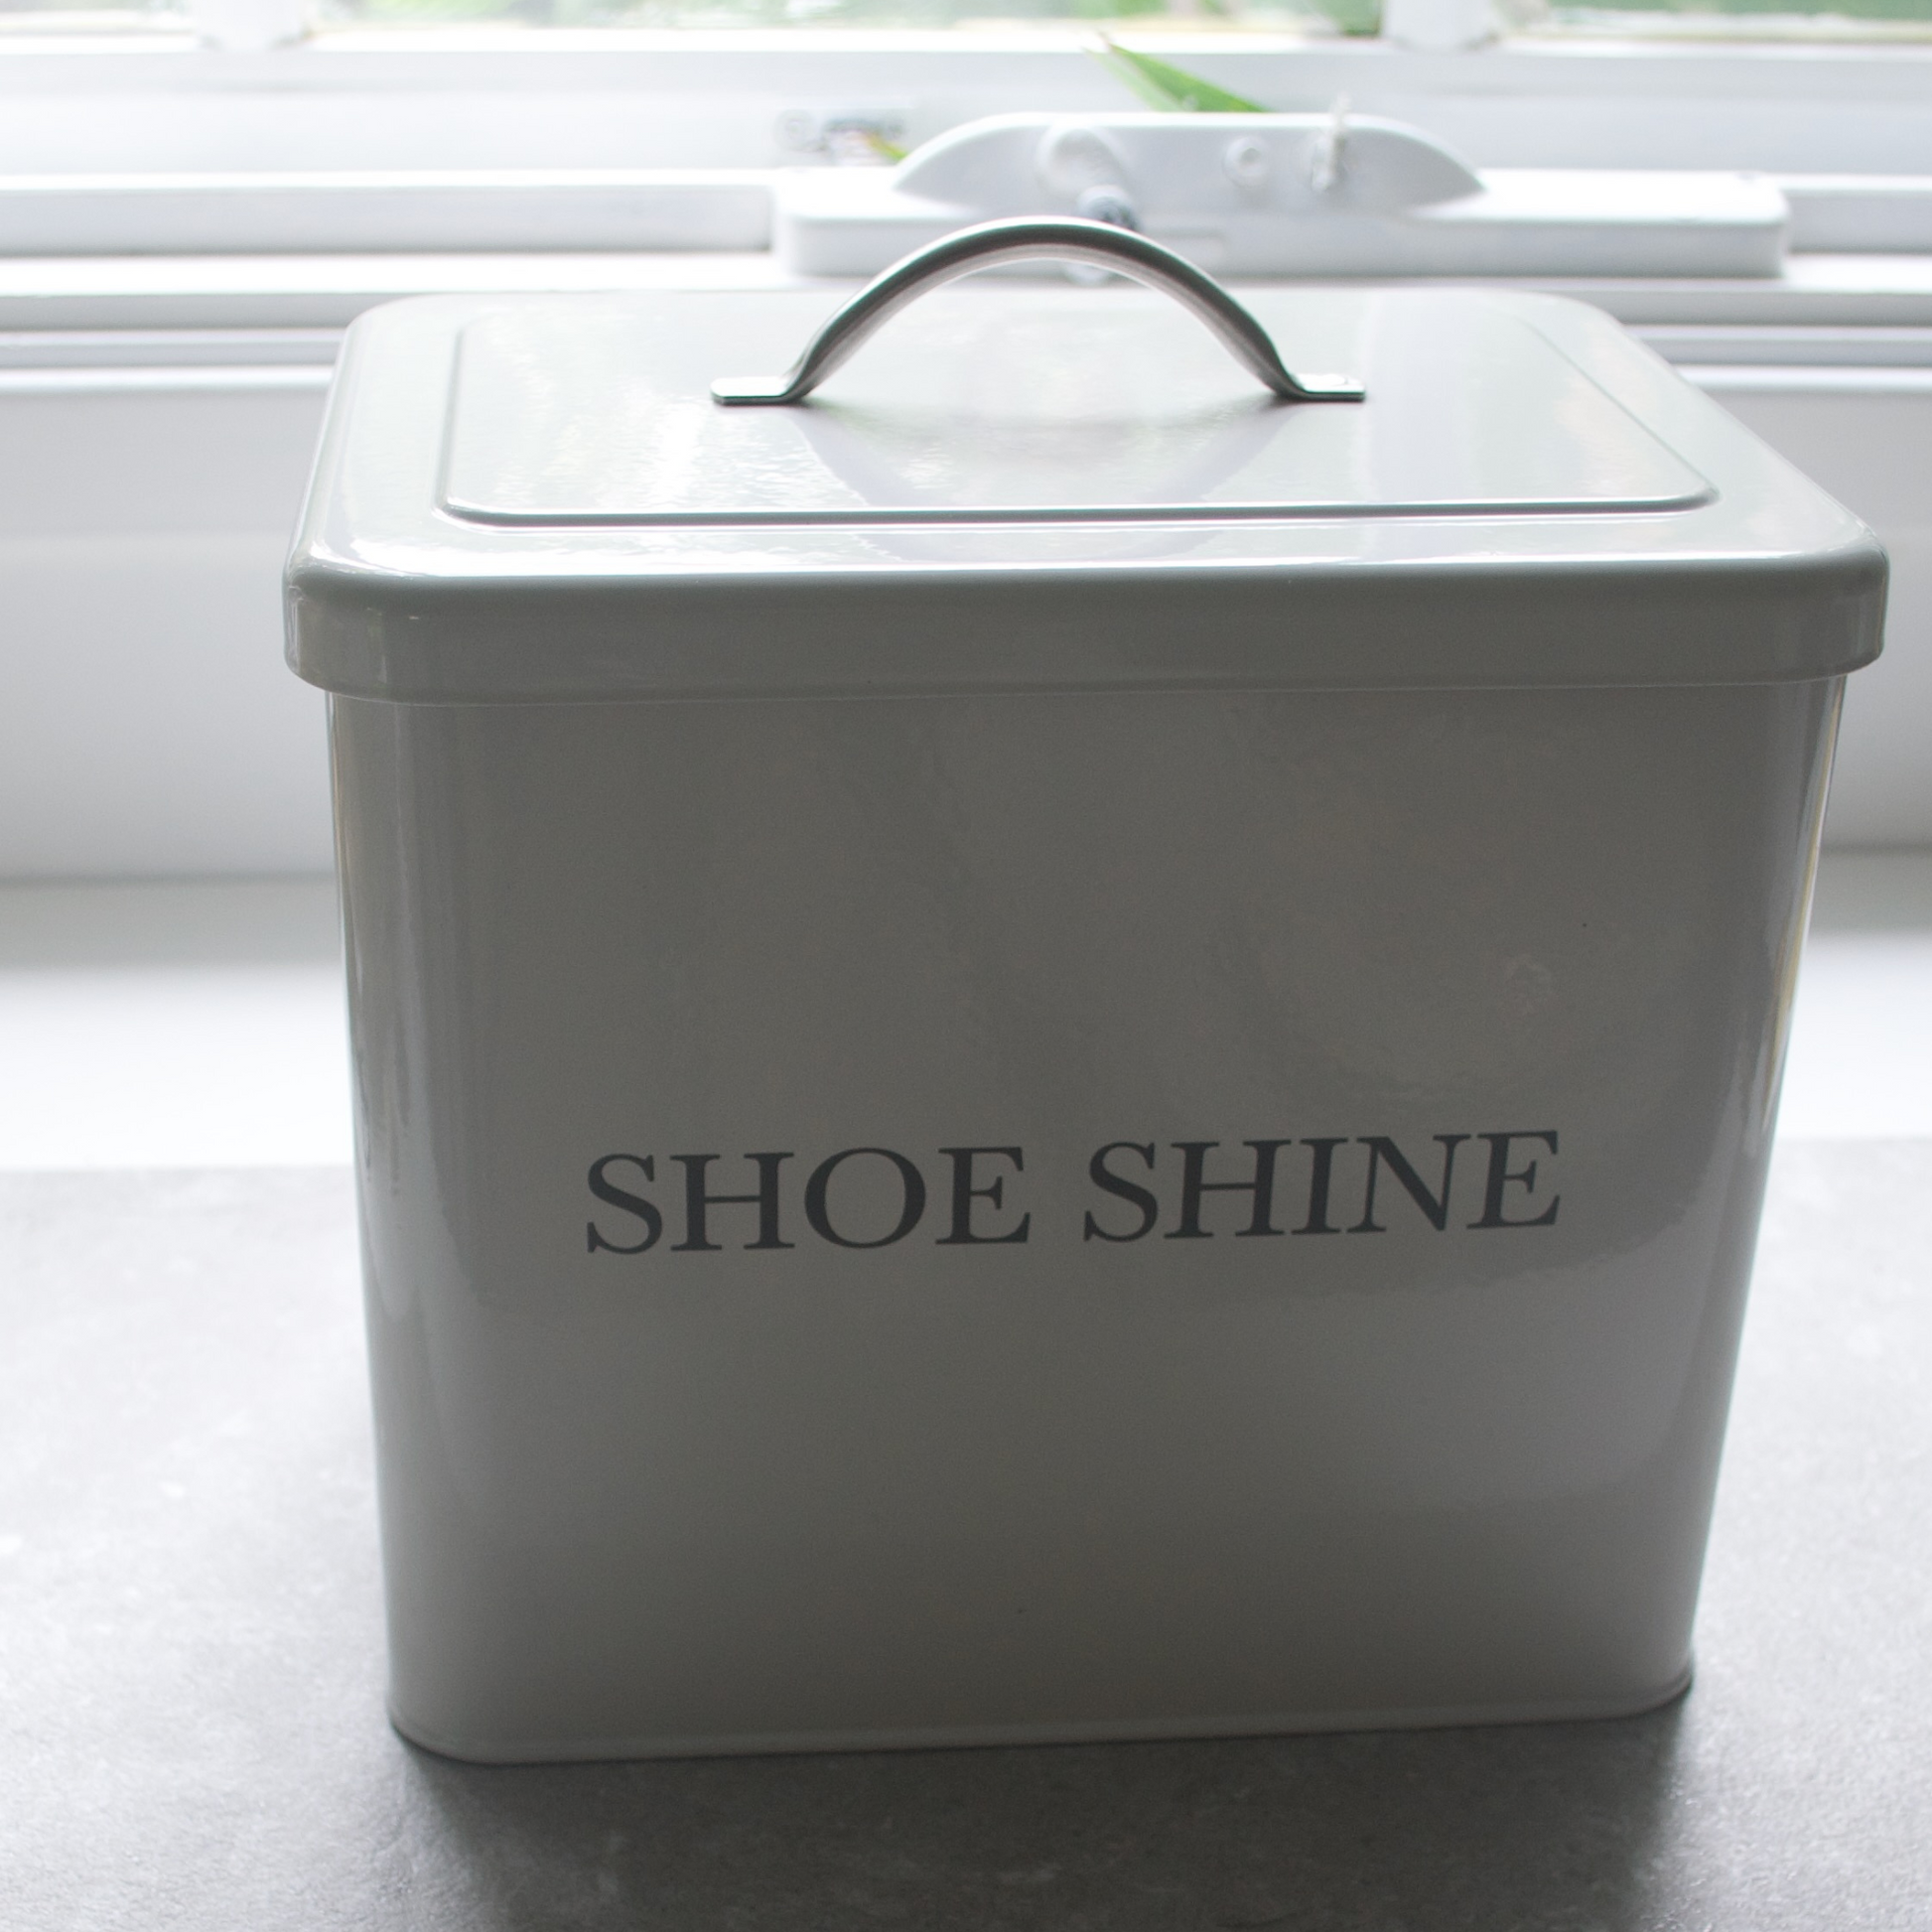 Shoe shine Box - Heaven in Earth